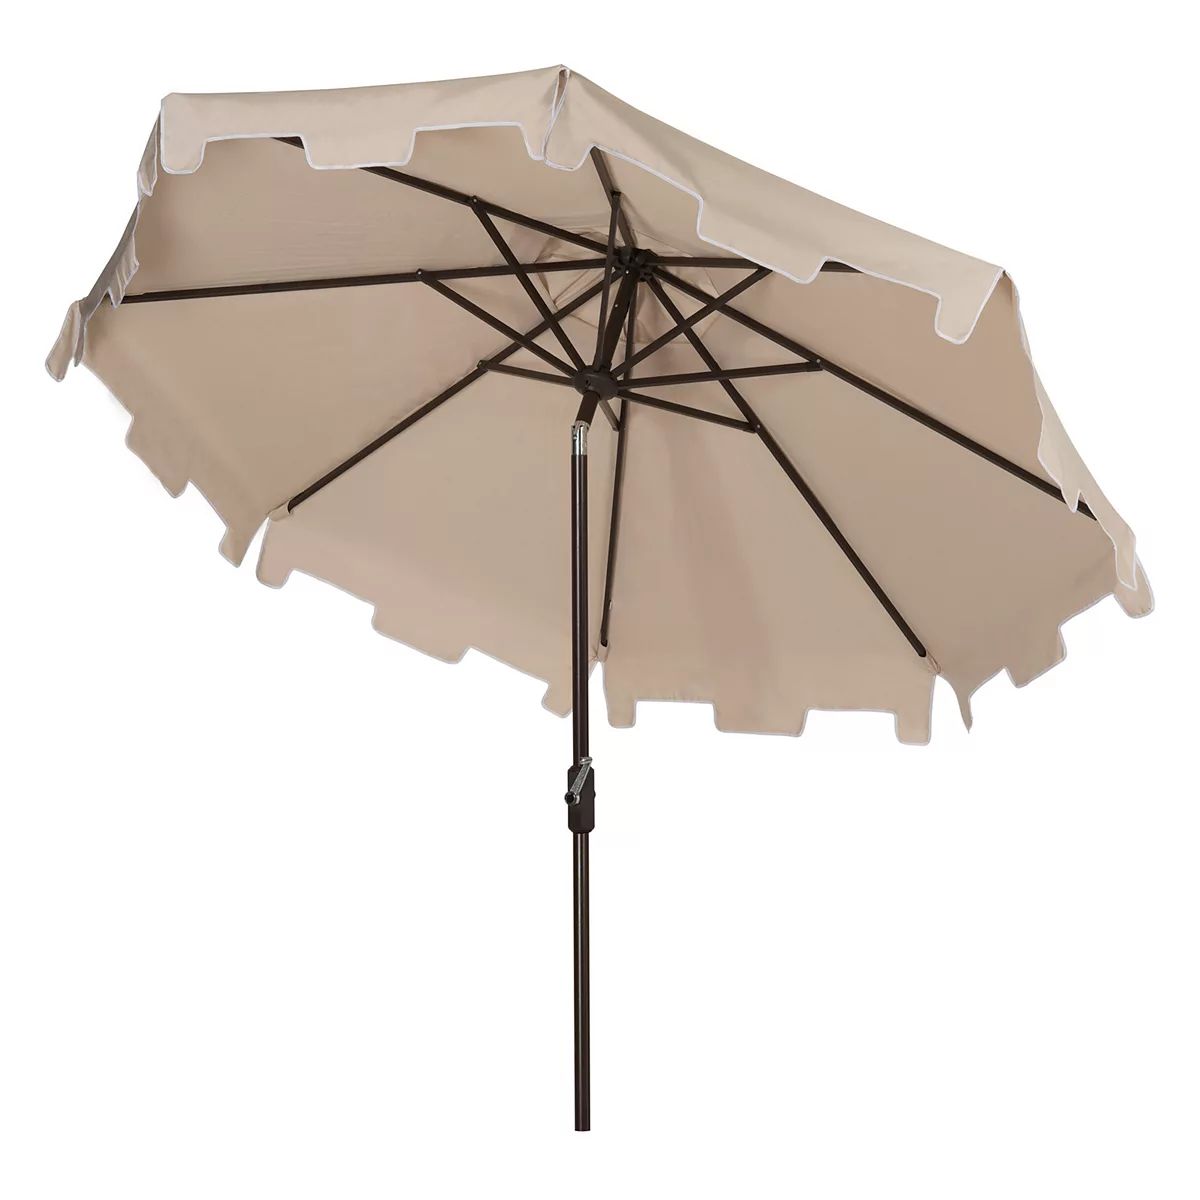 Safavieh Zimmerman 9-ft. Market Umbrella | Kohl's